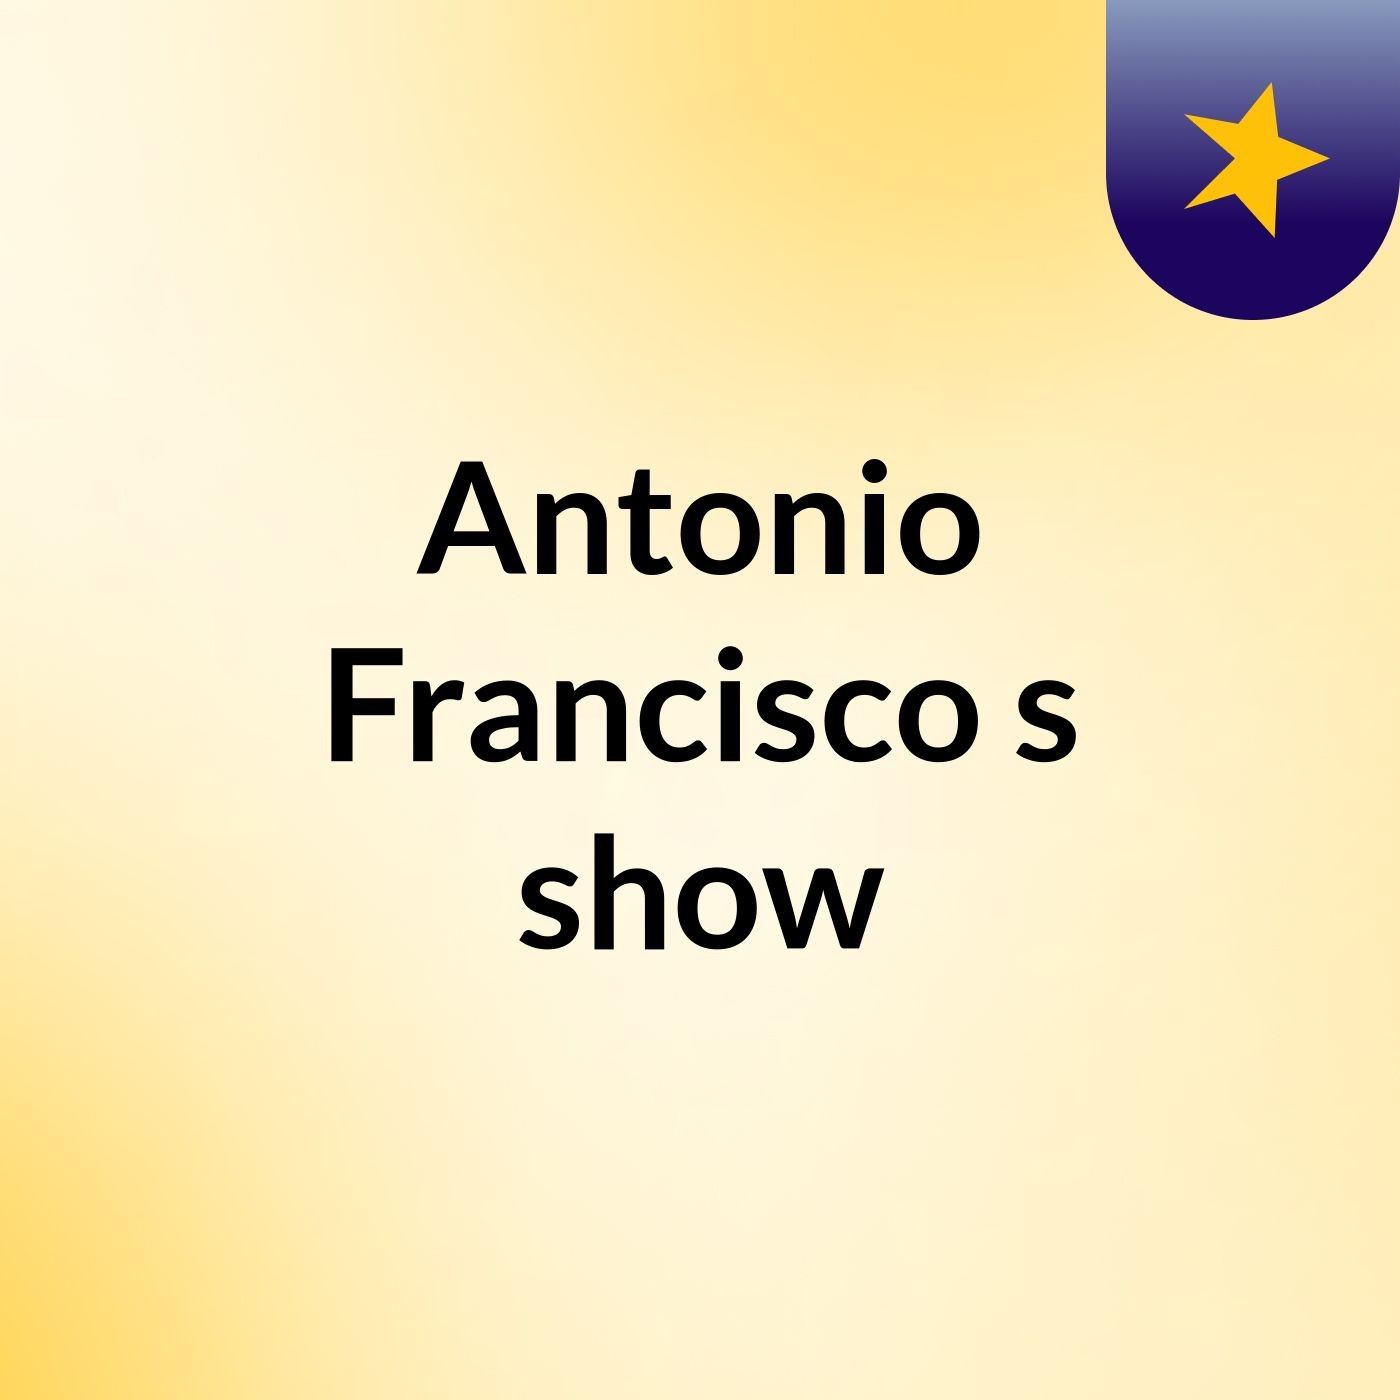 Antonio Francisco's show